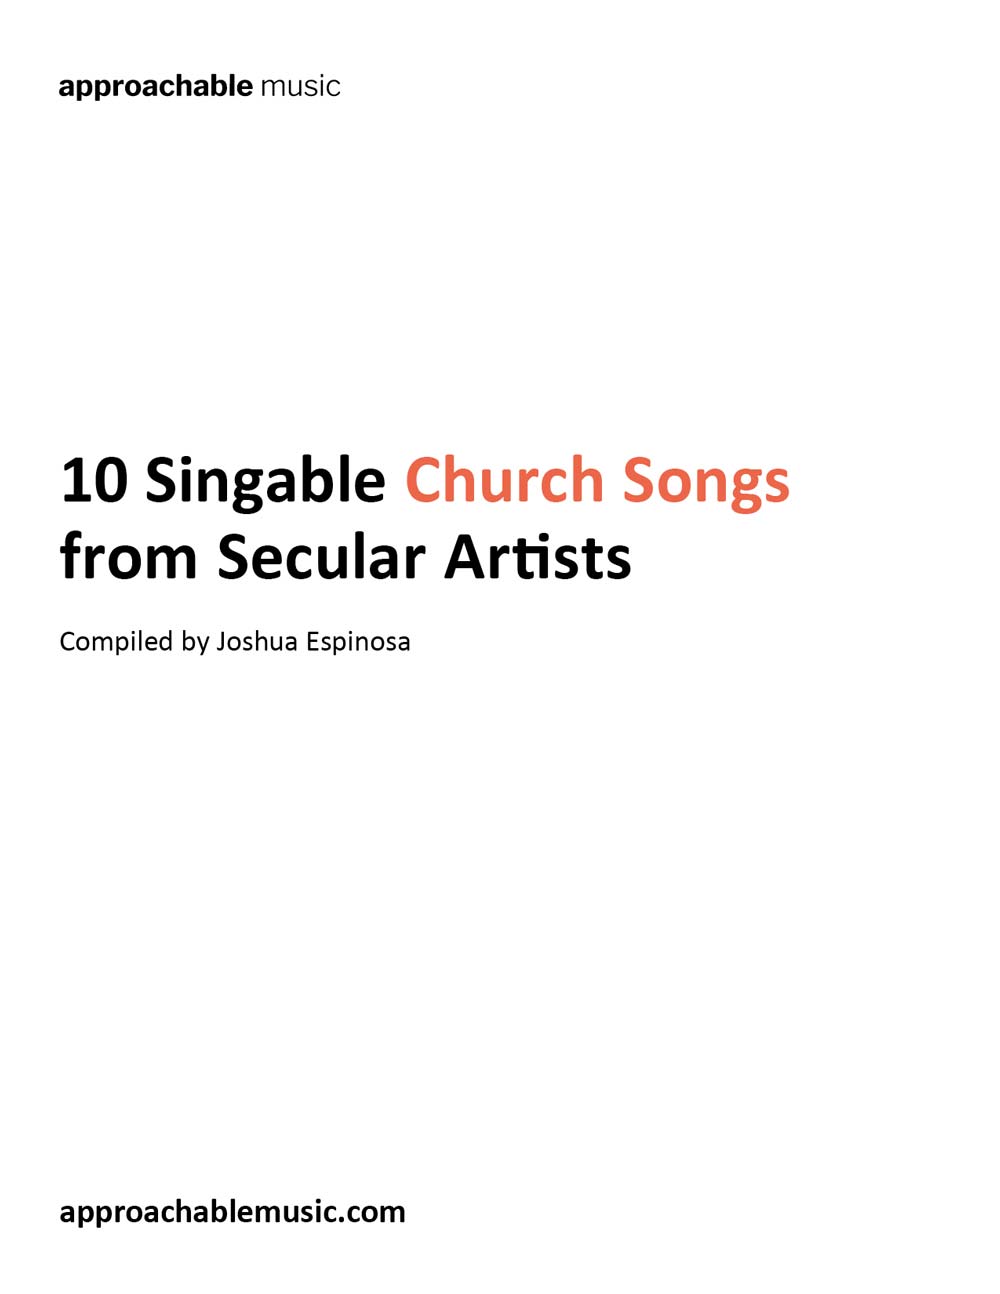 PDF: Sing-along Church Songs by Secular Artists